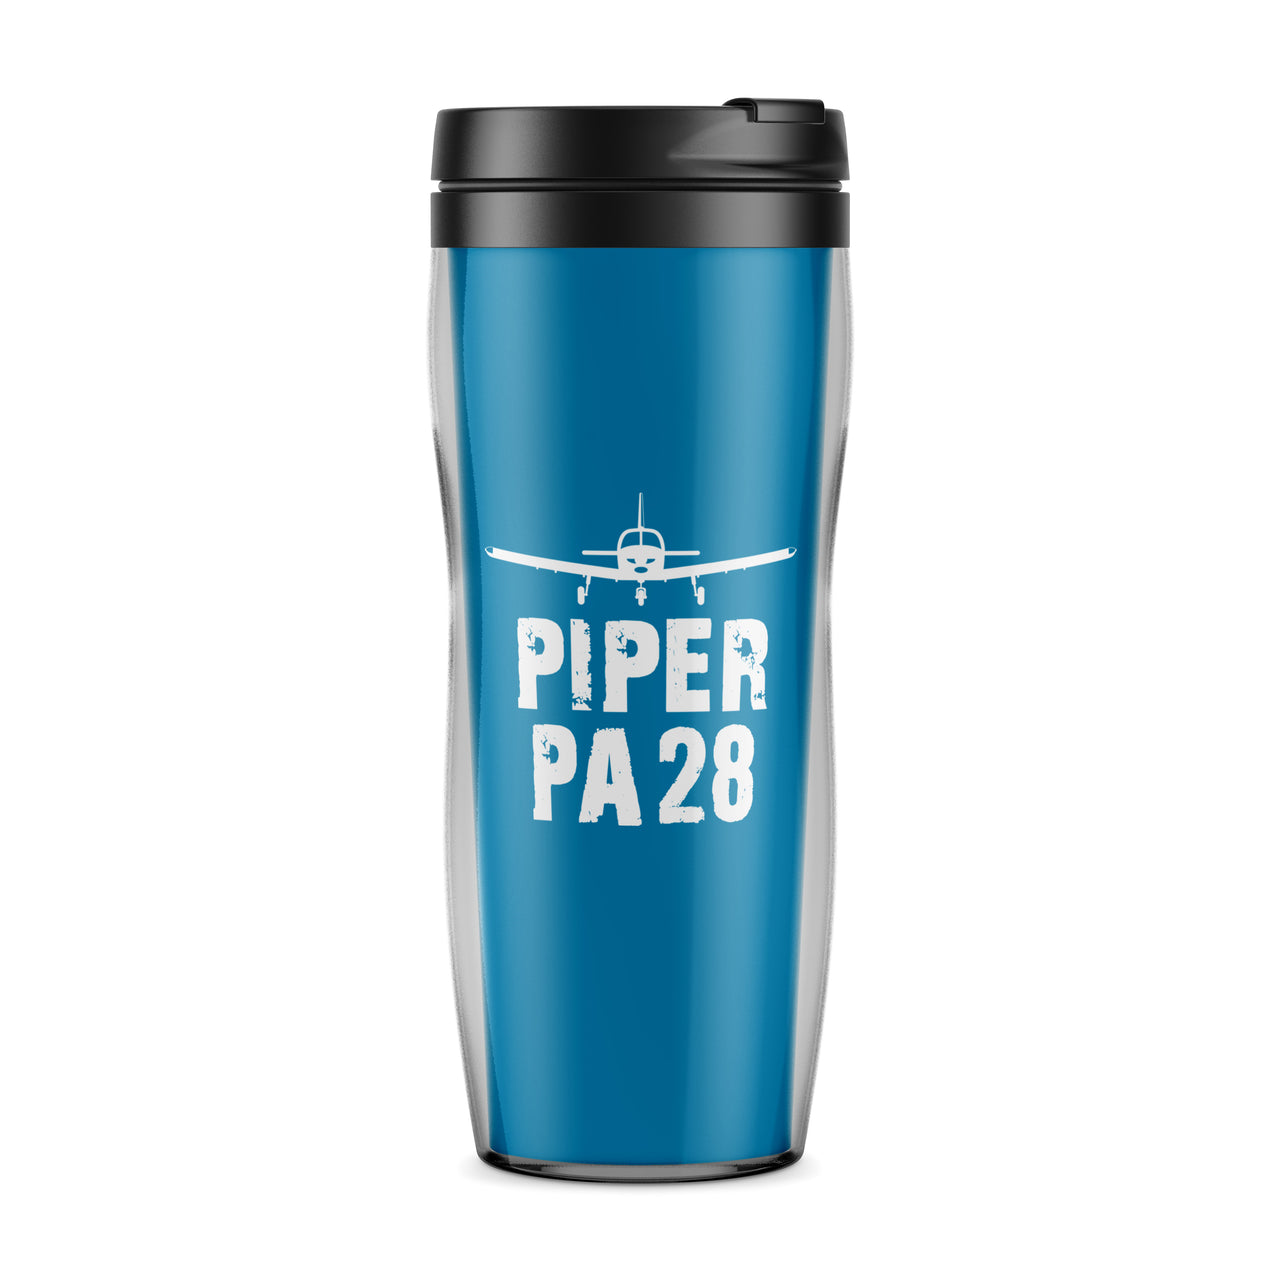 Piper PA28 & Plane Designed Travel Mugs